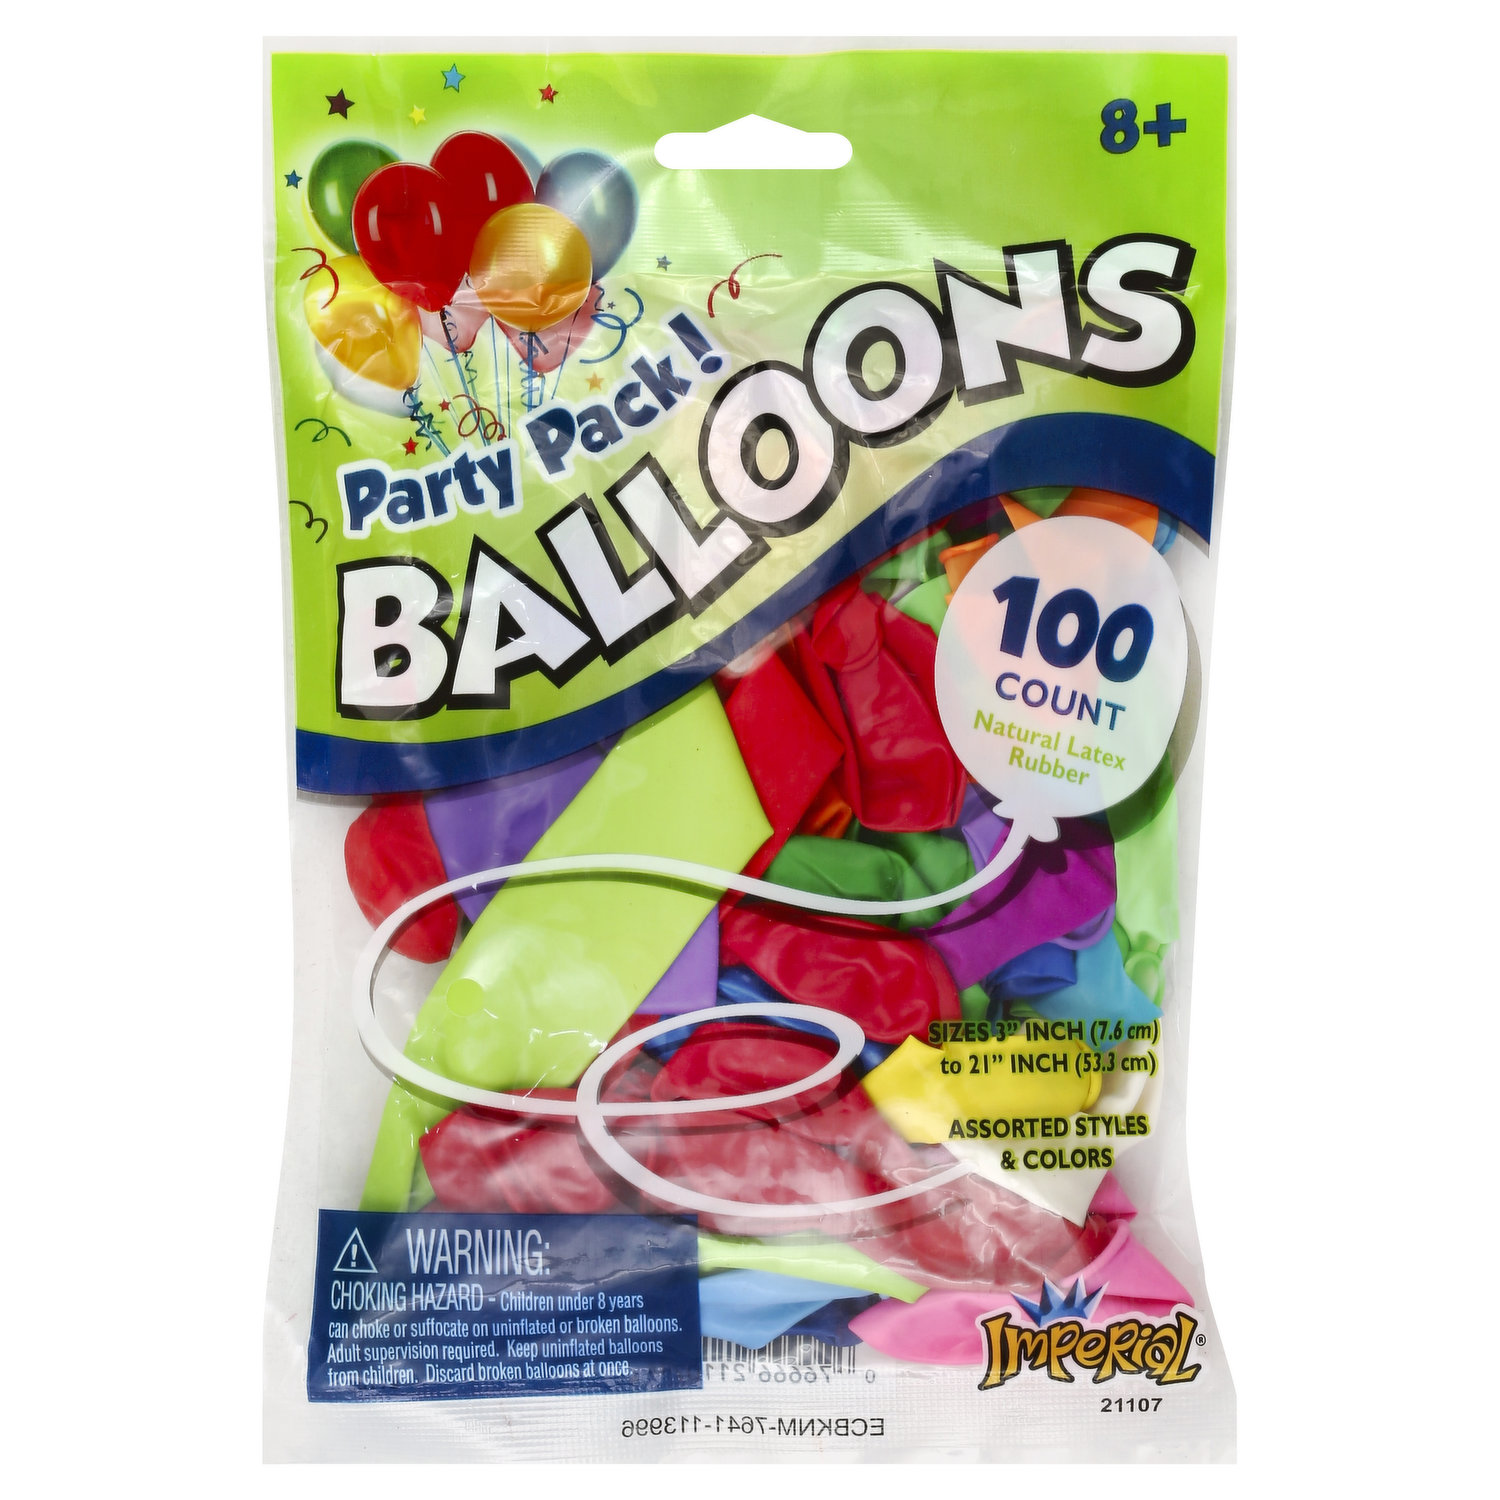 Bulk 288 Pc. Assorted Balloons with Sticks Kit